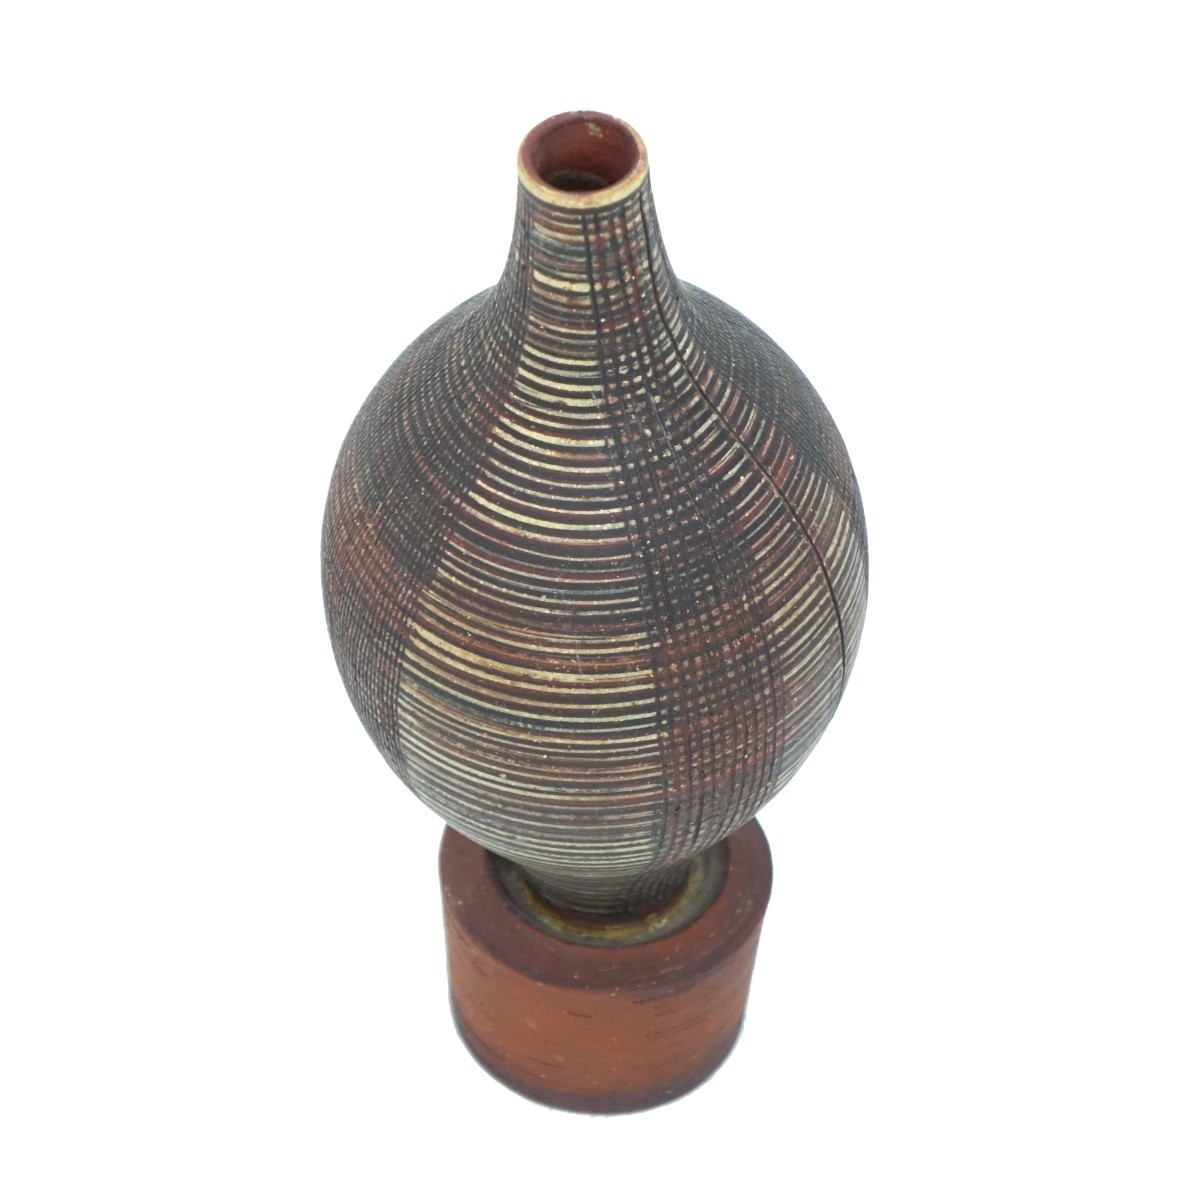 Wilhelm Kage (1889 - 1960) Pottery Vase